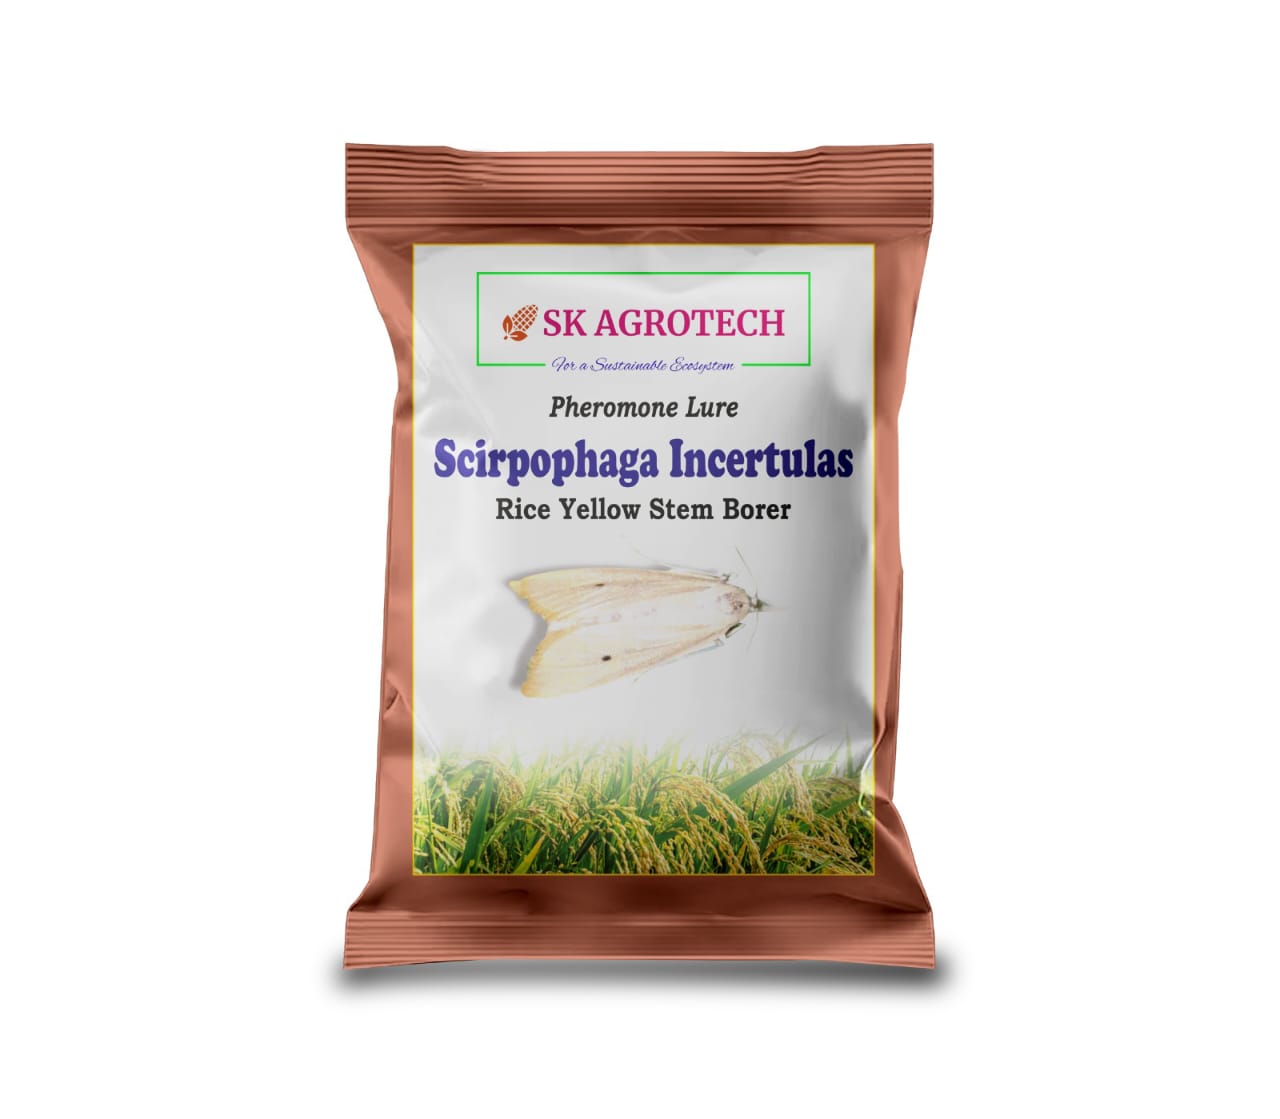 Rice Yellow Stem Borer (Scirpophaga incertulas) pheromone lure